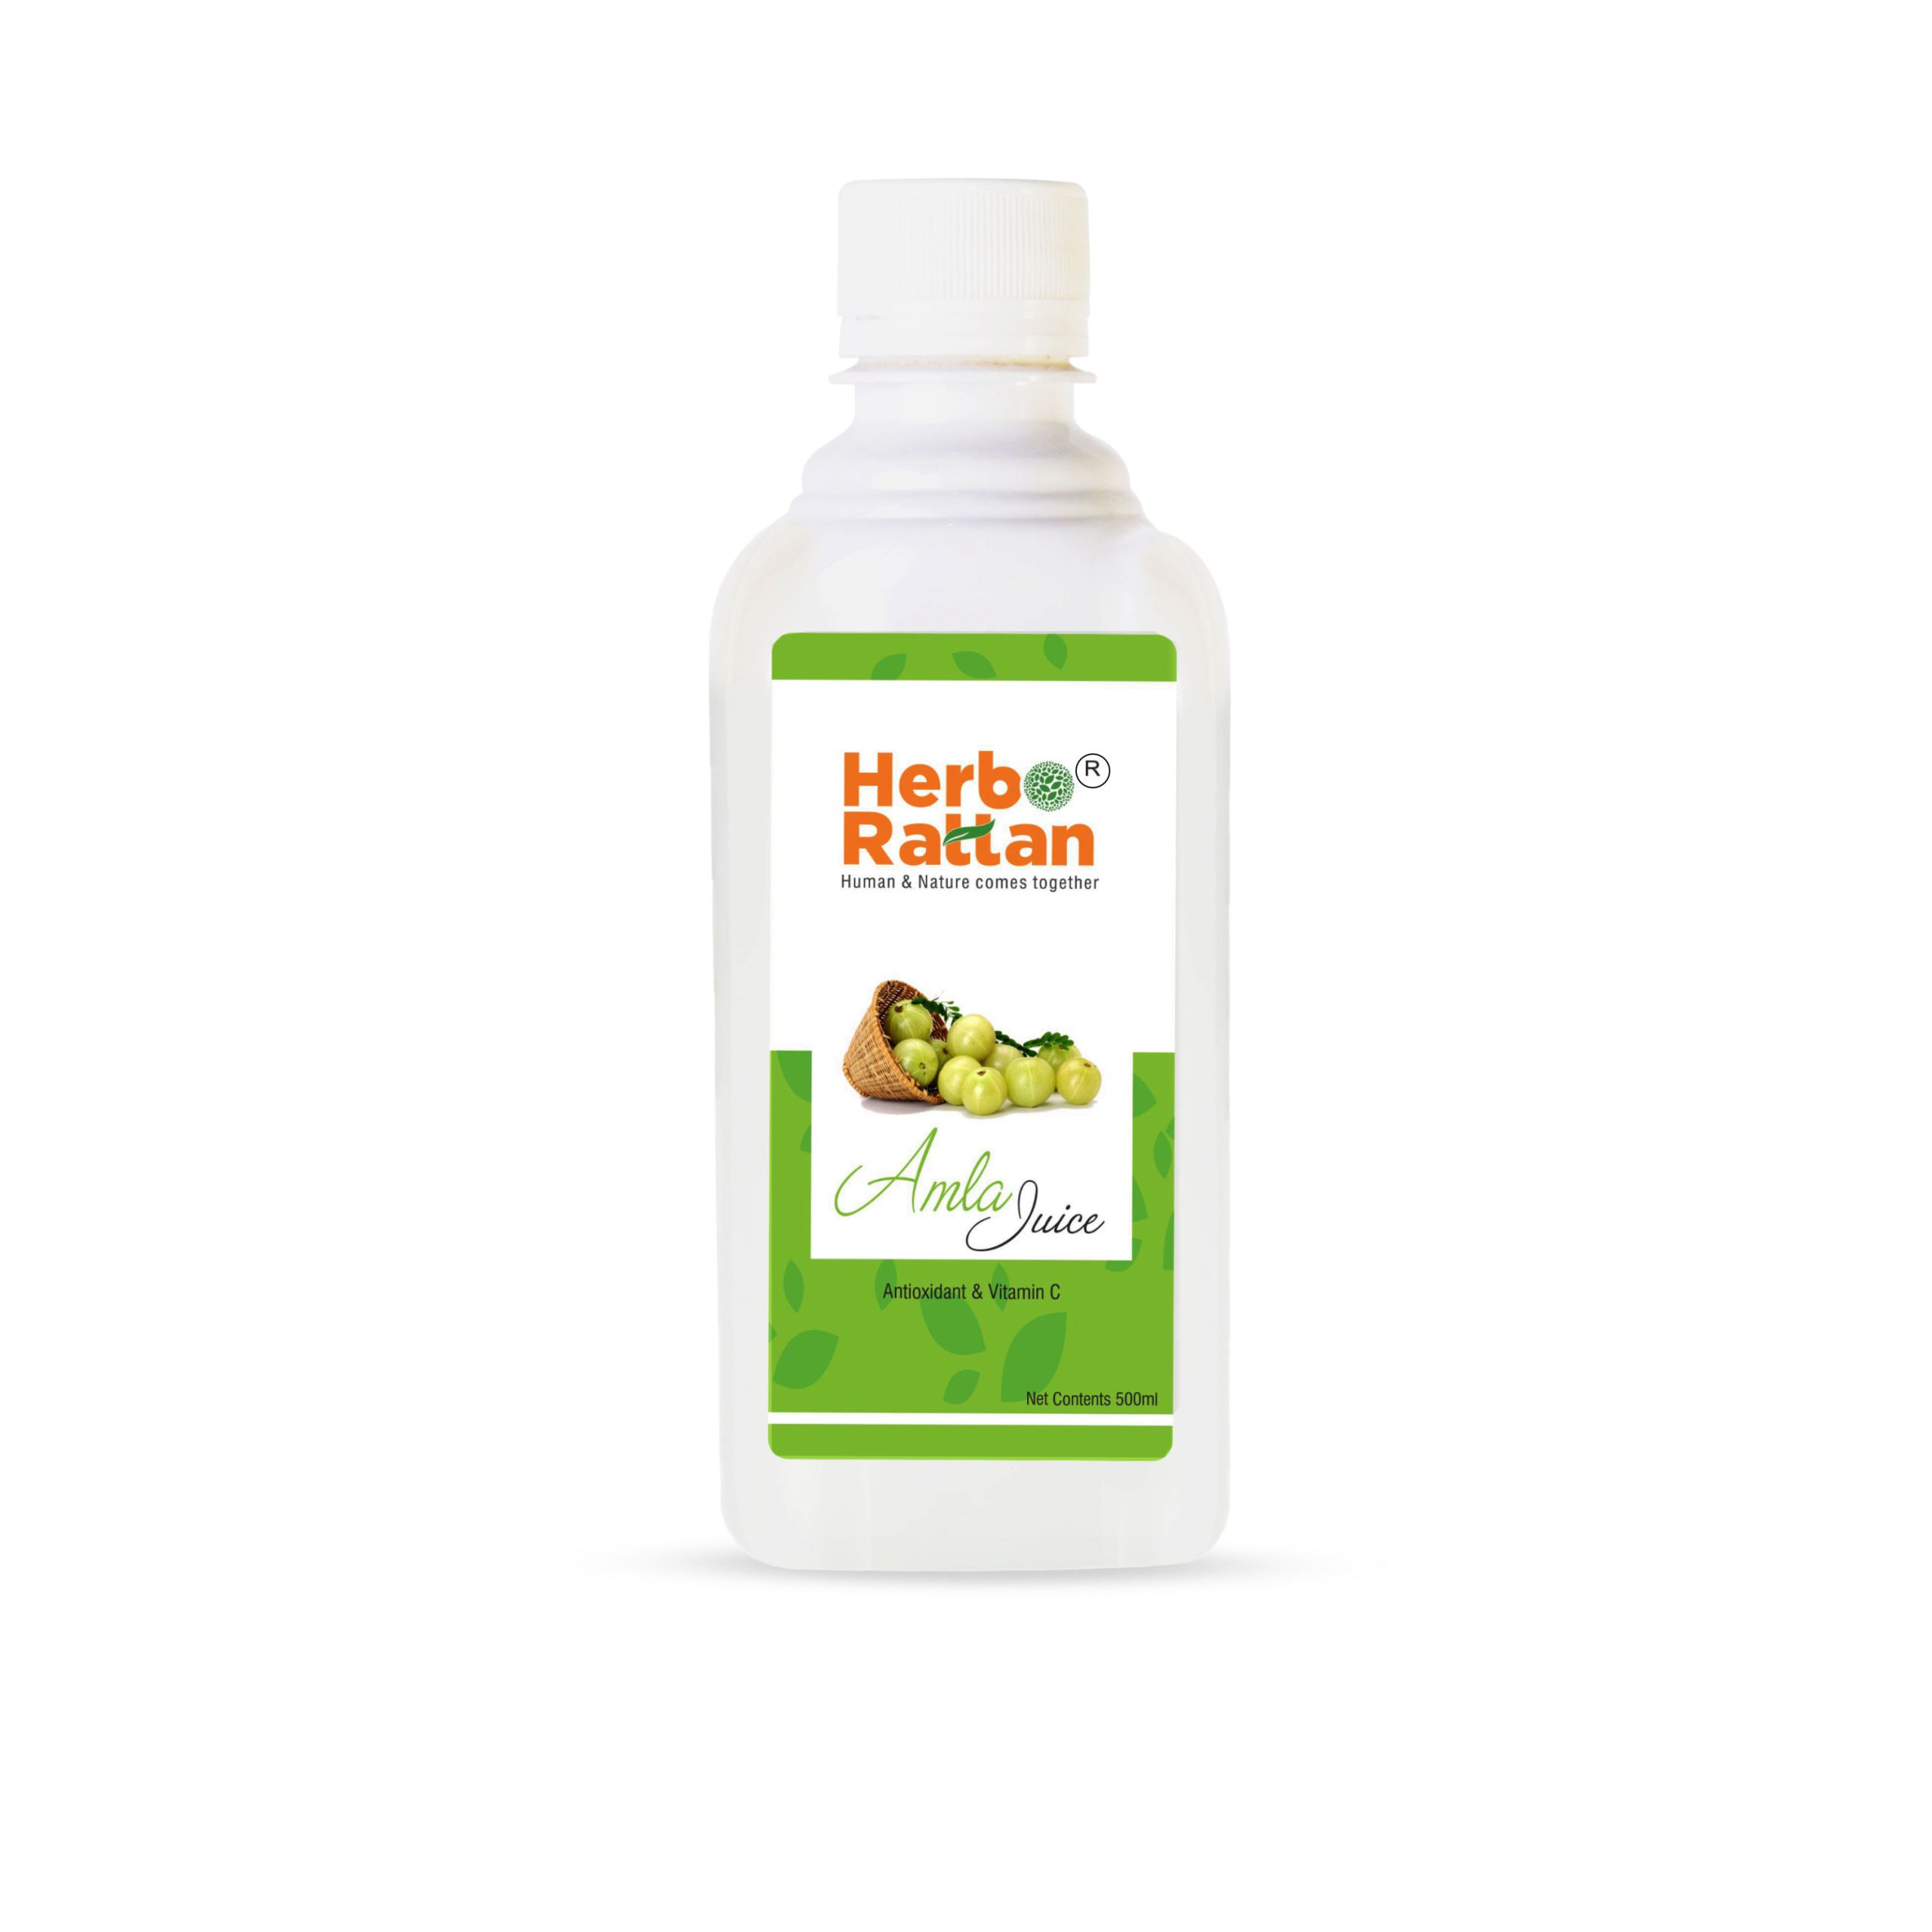 Herbo Rattan Amla Juice – 500ml